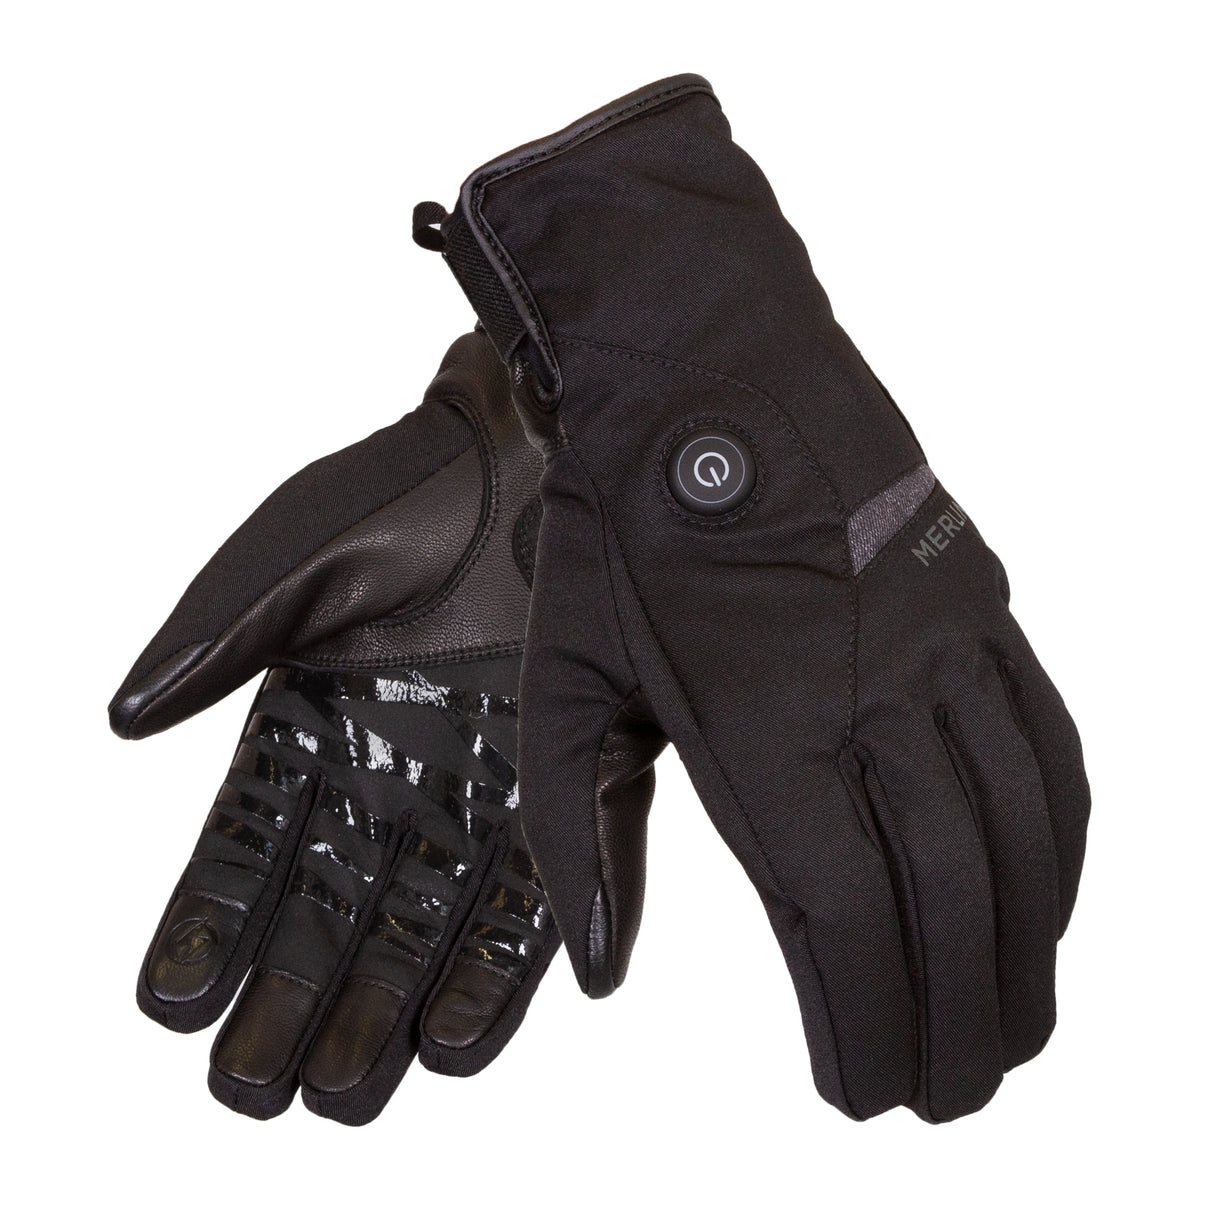 Merlin Finchley Heated Gloves - Black